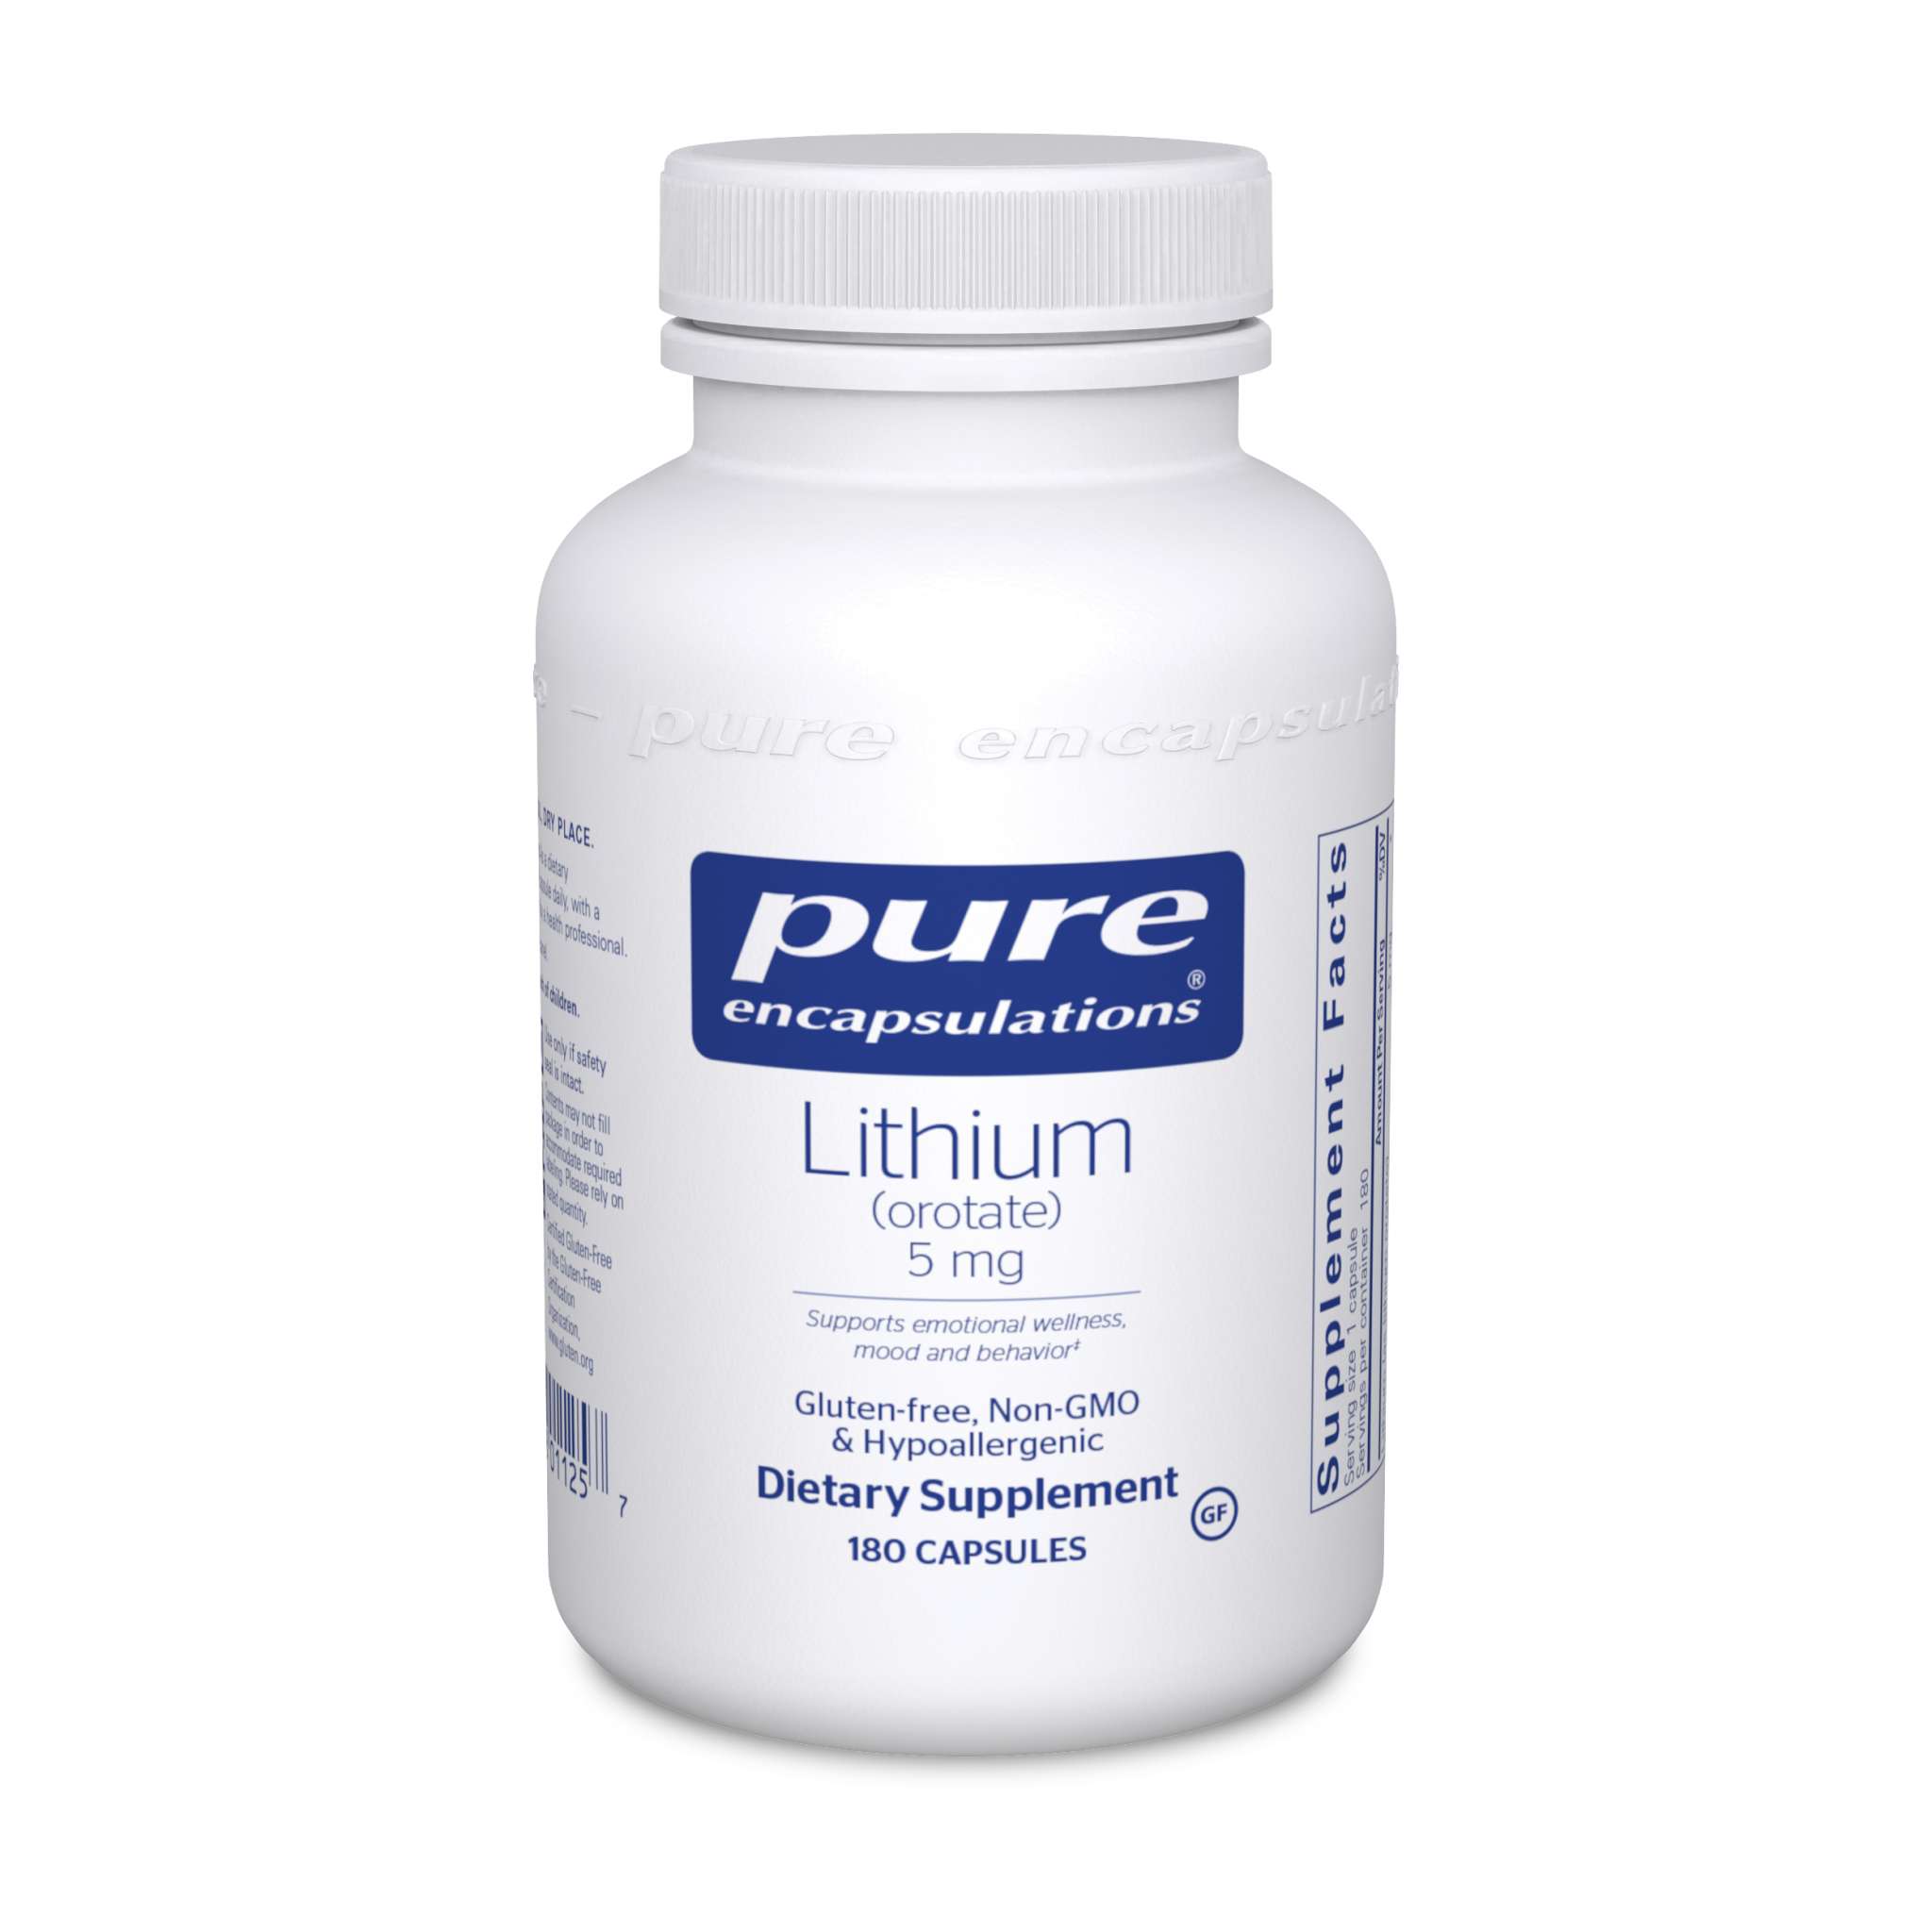 Pure Encapsulations - Lithium Orotate 5 mg